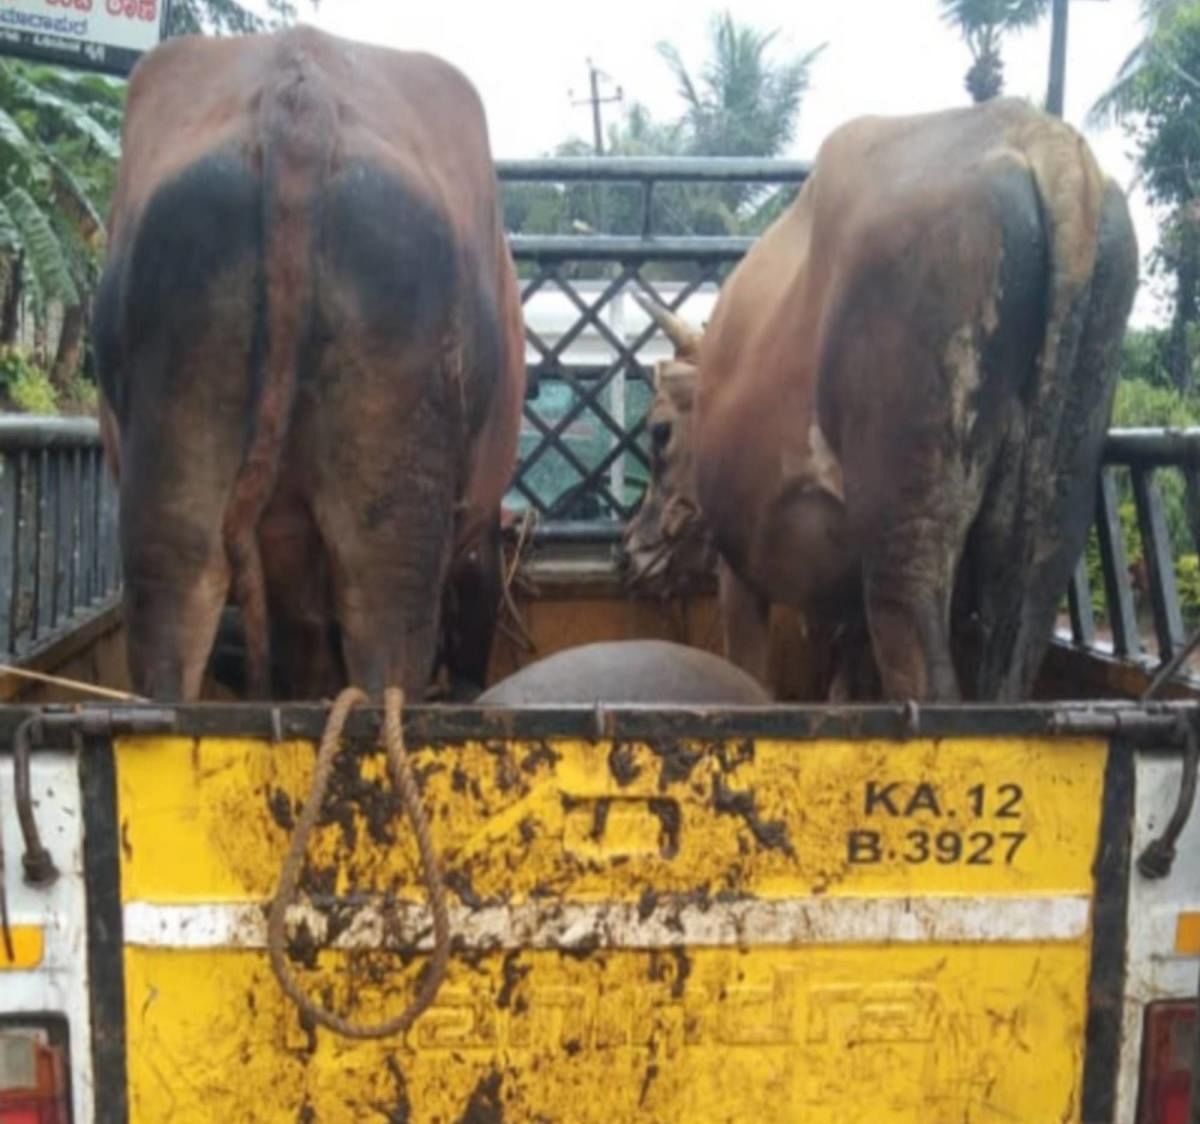 Cattle seized at Takeri village near Somwarpet.